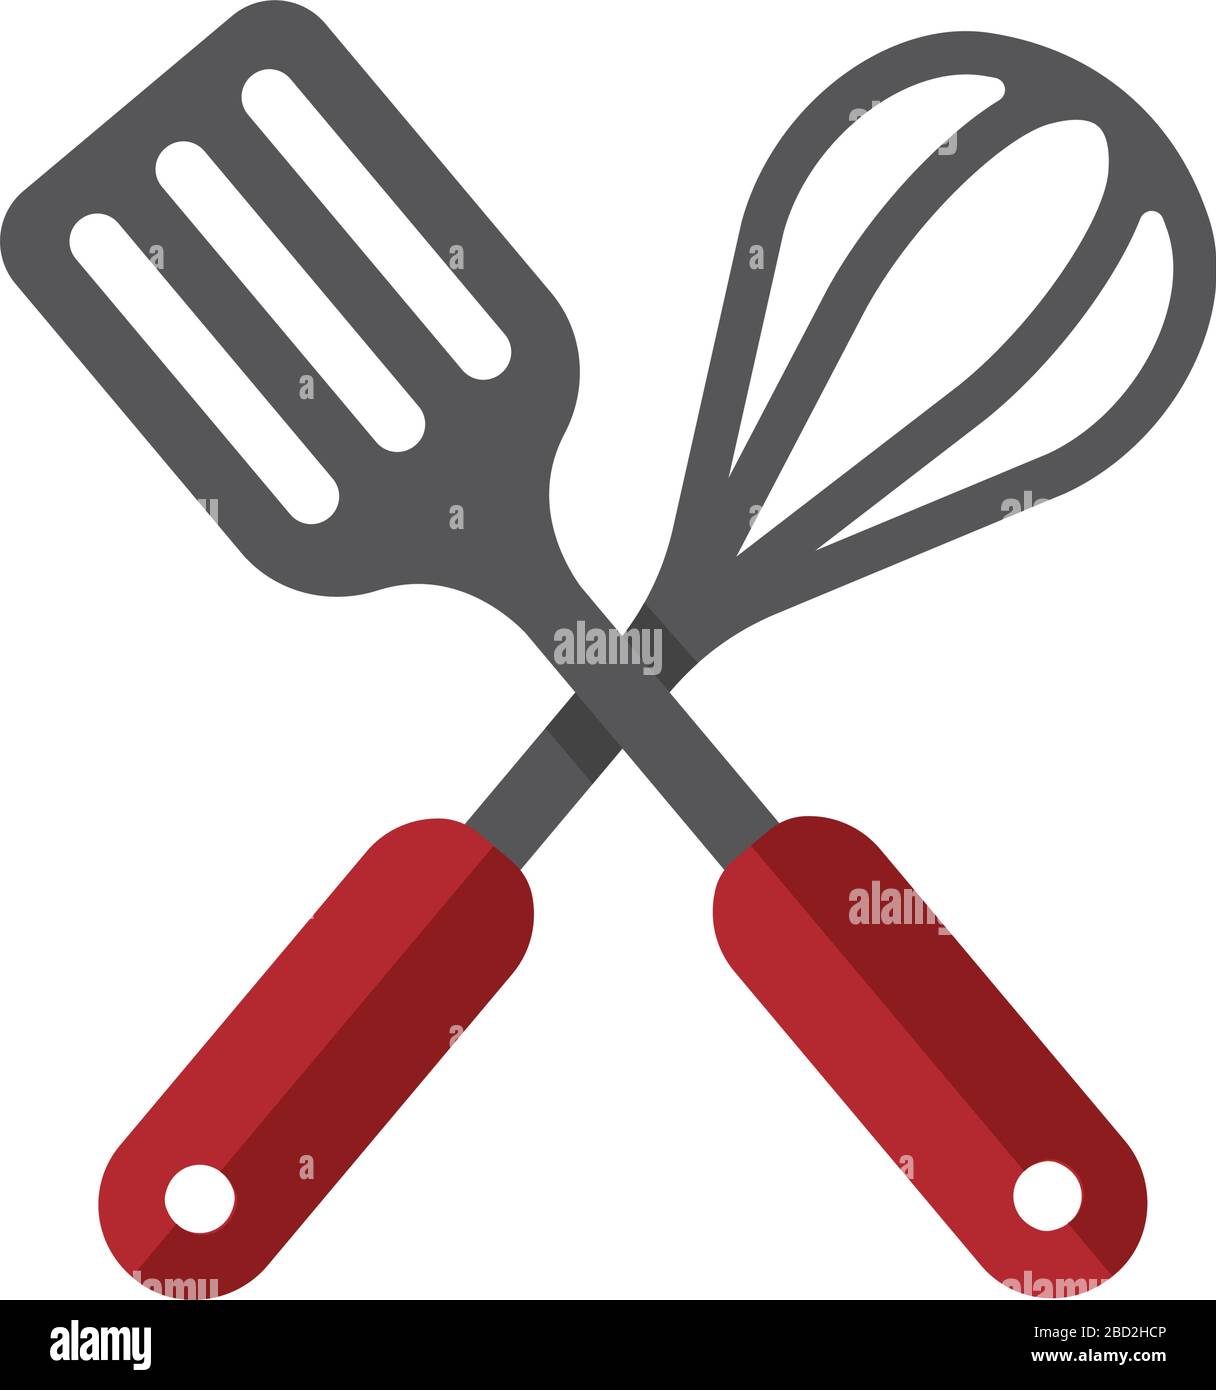 https://c8.alamy.com/comp/2BD2HCP/kitchen-utensils-icon-spatula-whisk-2BD2HCP.jpg